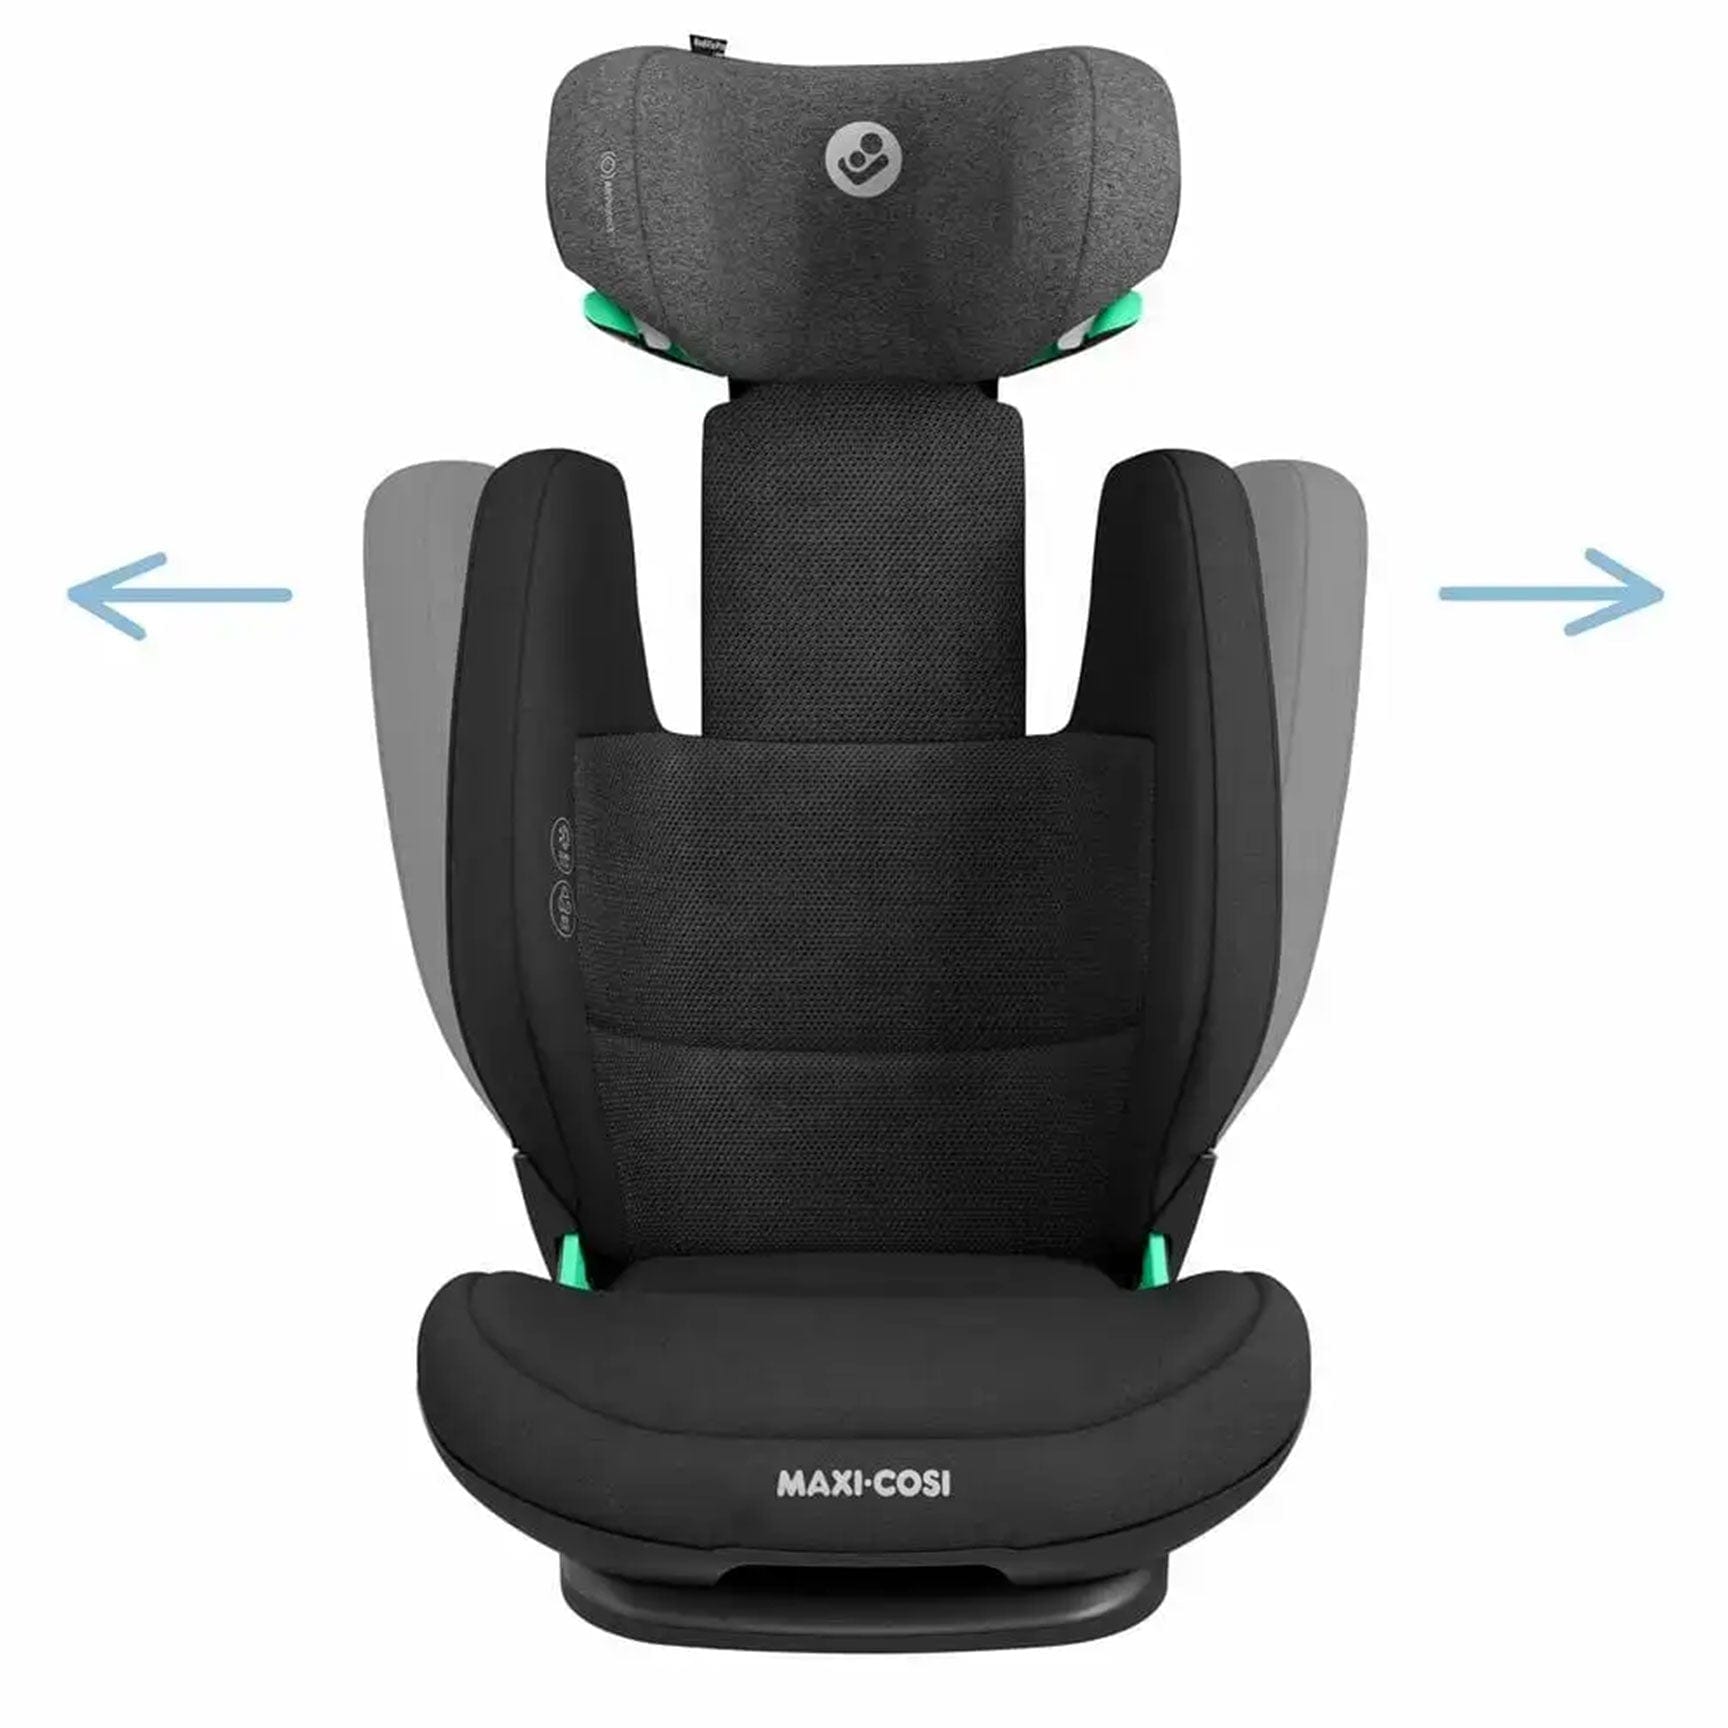 Maxi-Cosi Rodifix Pro i-size Car Seat in Authentic Black i-Size Car Seats 8800671110 8712930177685